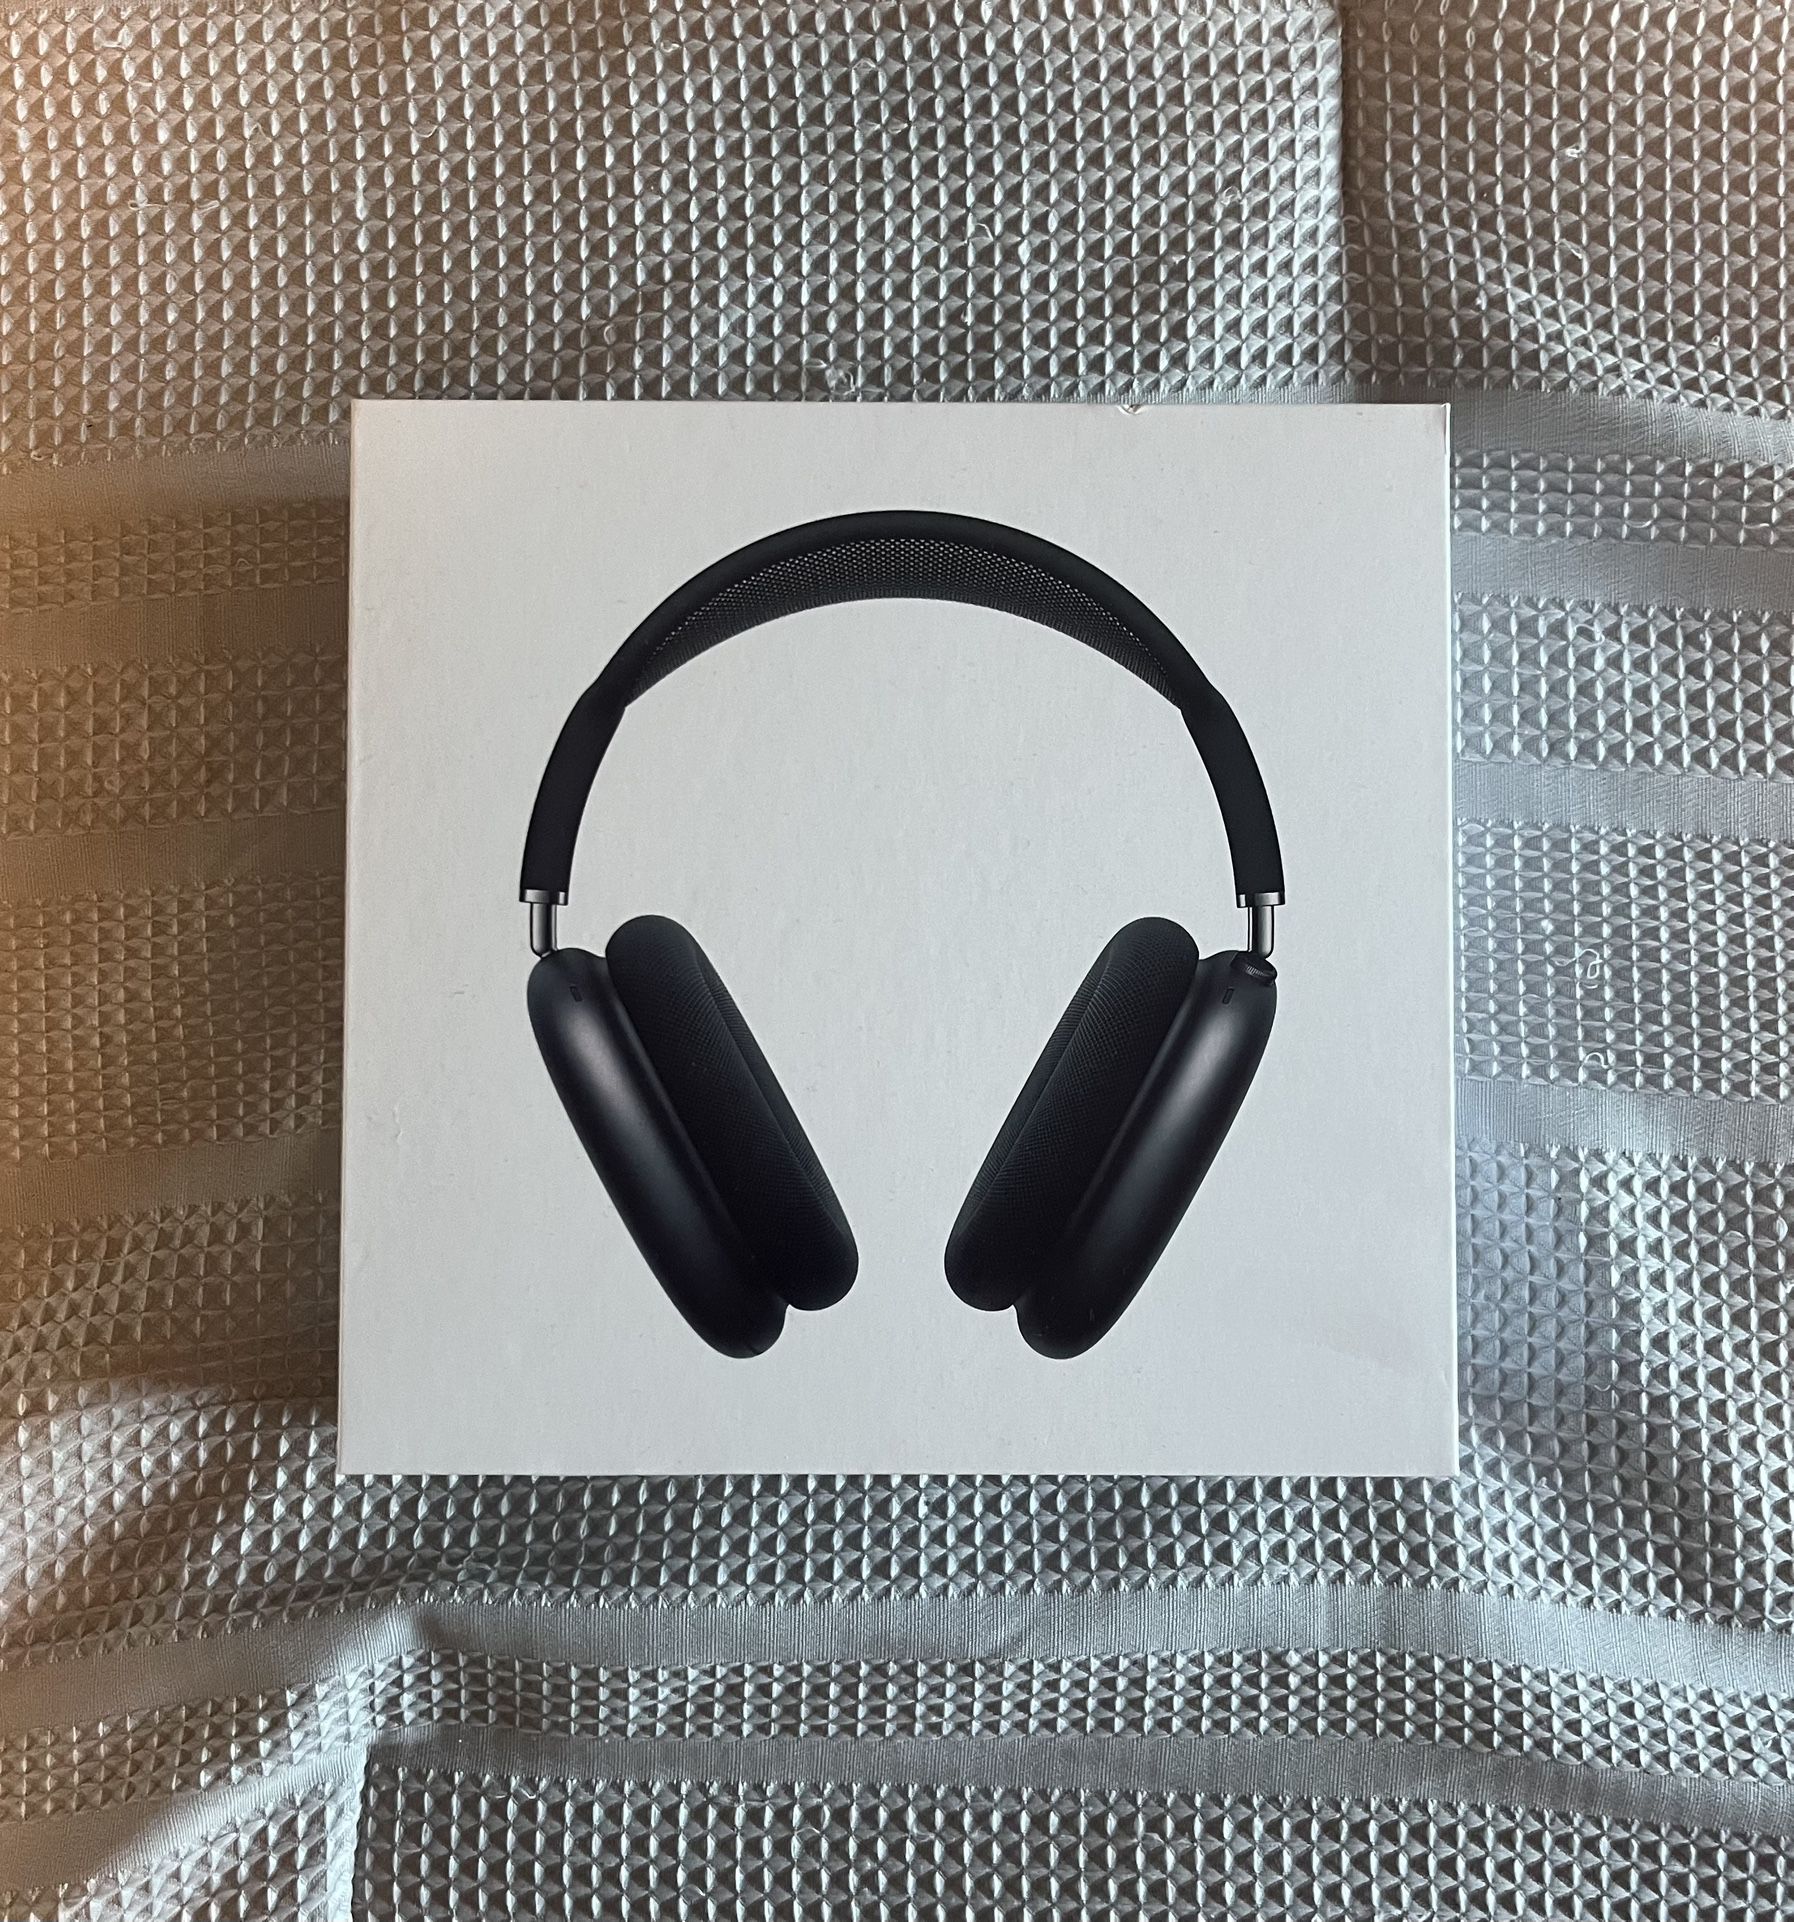 Apple AirPod Max Headphones - Space Grey Over Ear Headphones Earbuds